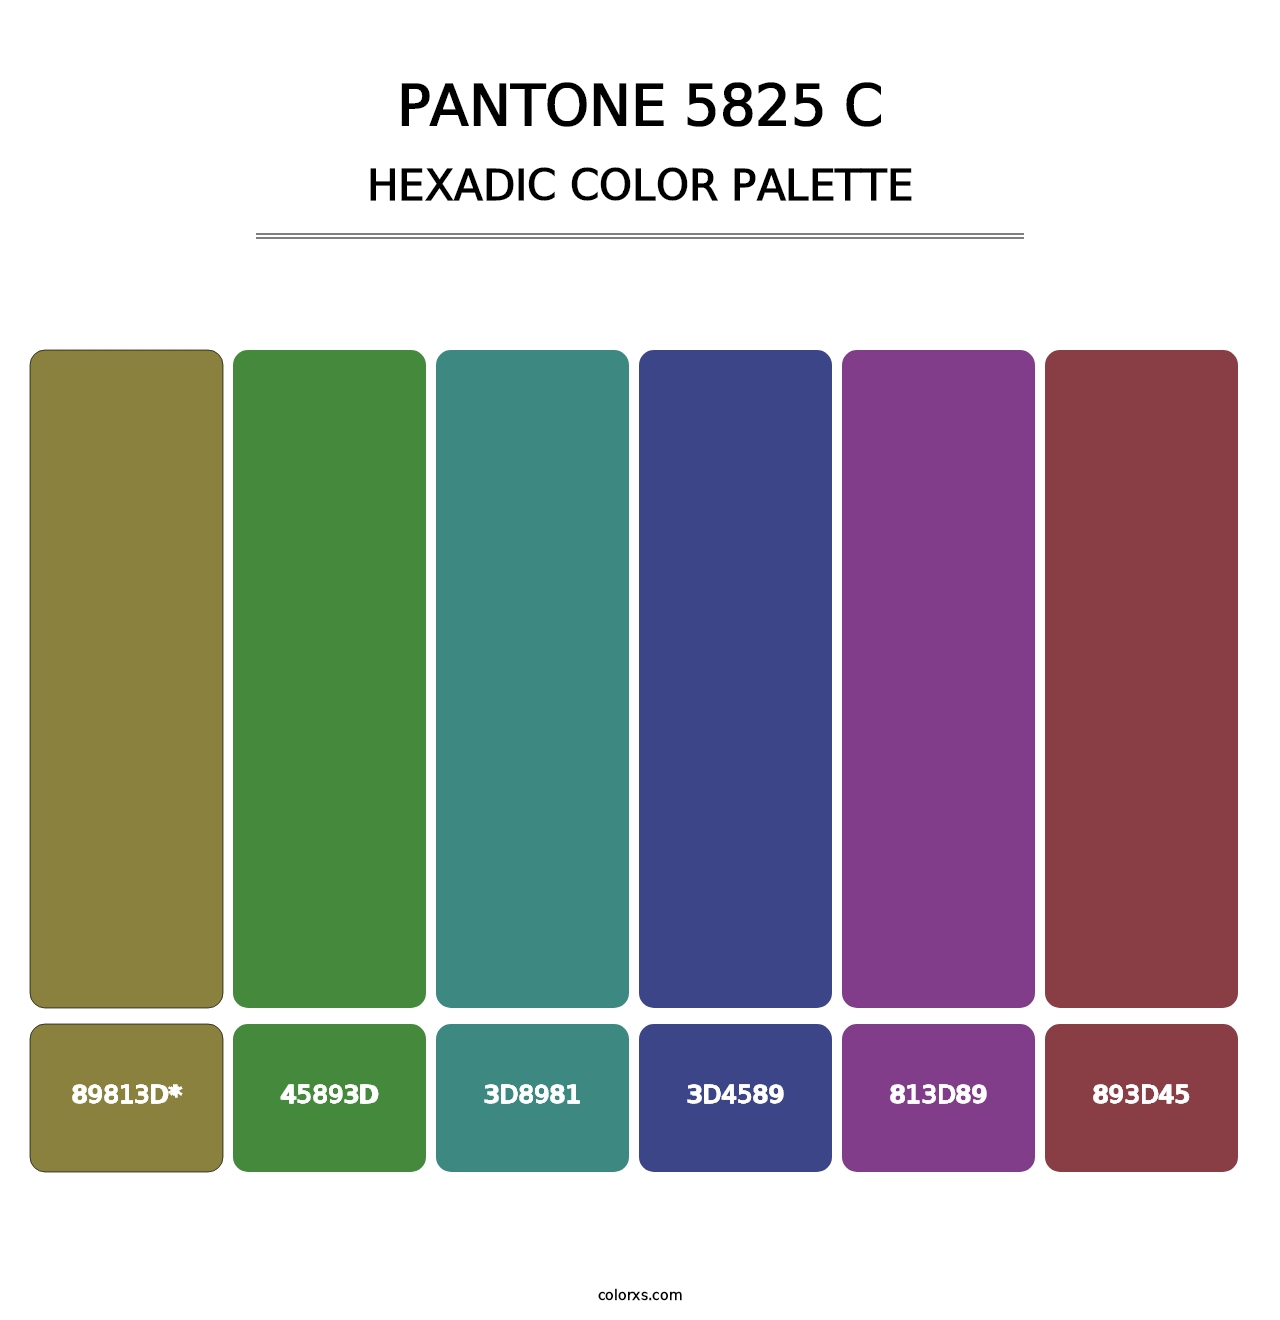 PANTONE 5825 C - Hexadic Color Palette